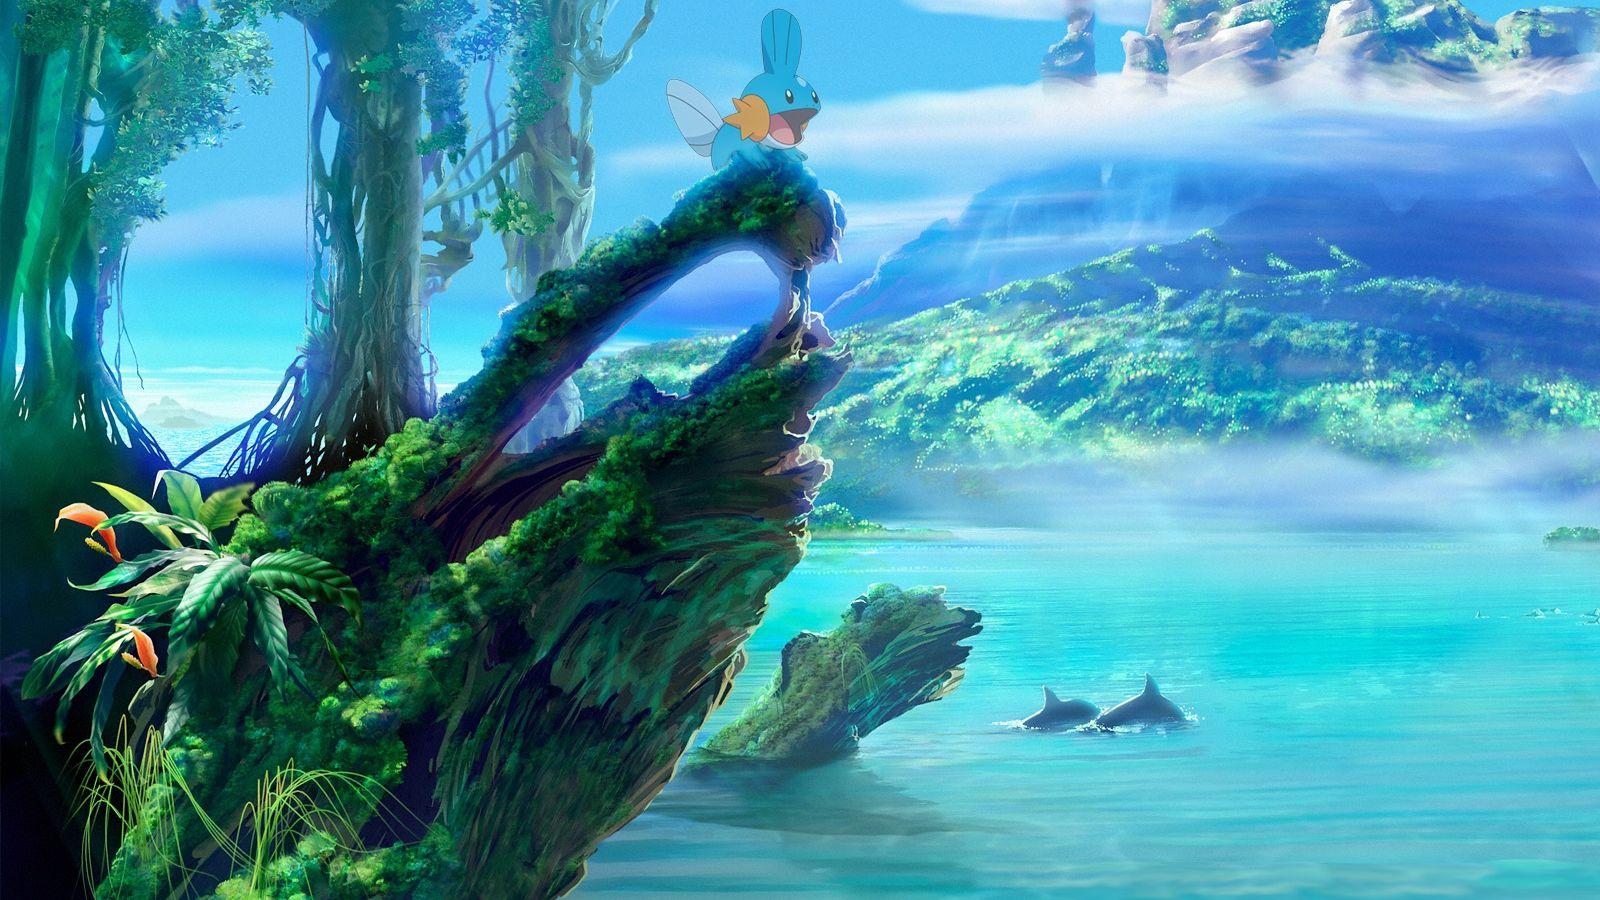 Ocean Pokemon Wallpapers - Top Free Ocean Pokemon Backgrounds ...